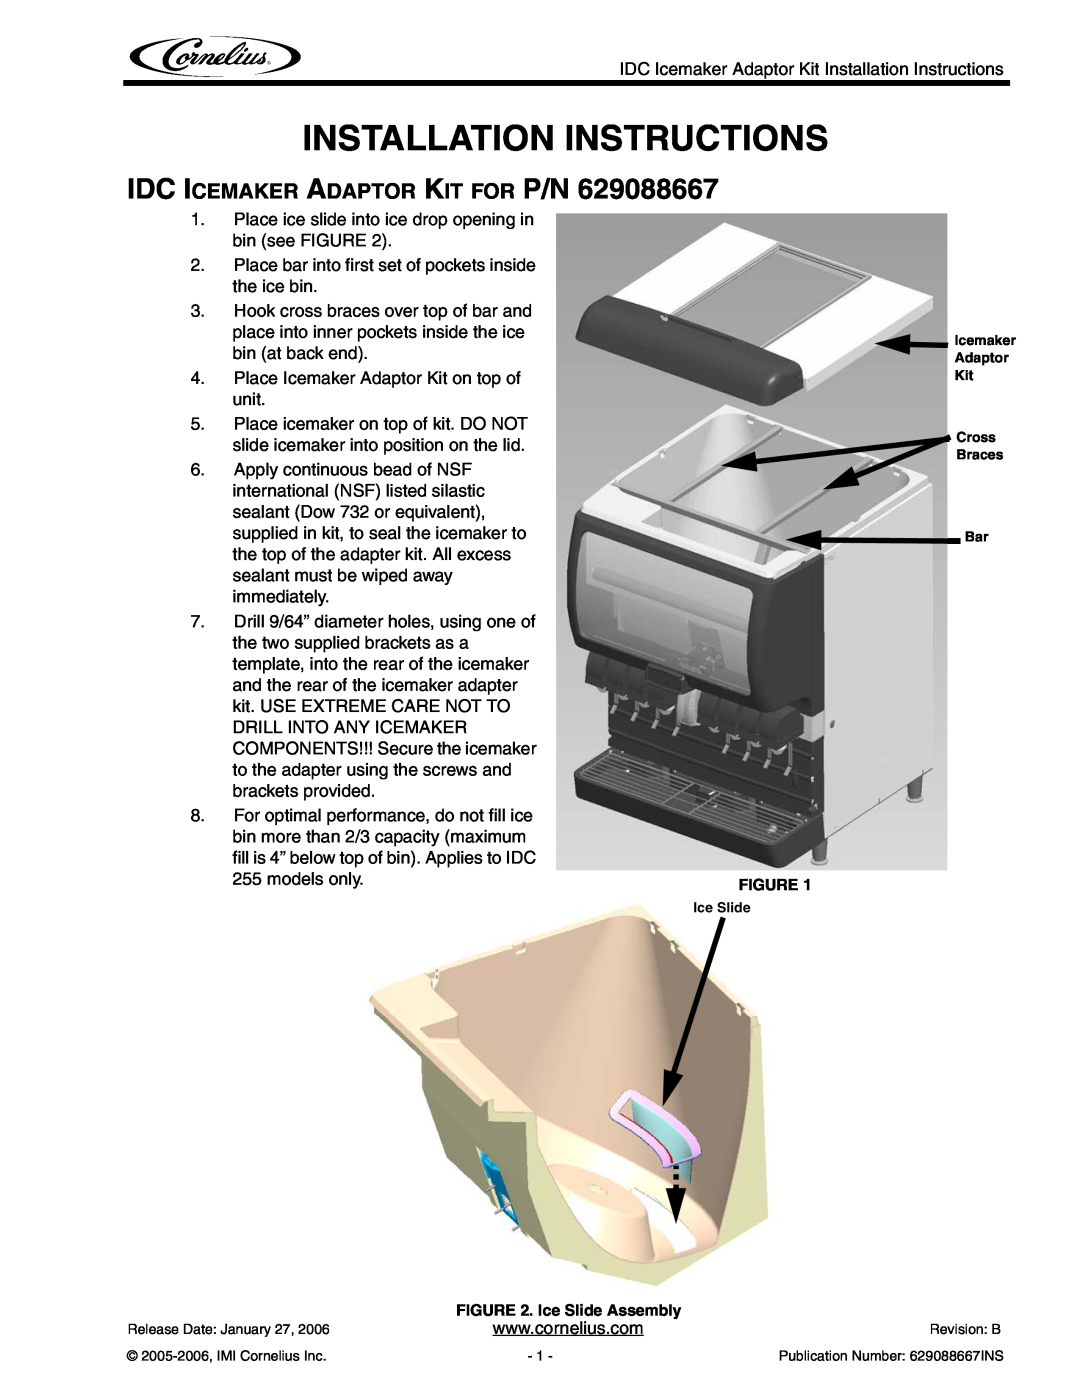 Cornelius P/N 629088667 installation instructions Installation Instructions, Idc Icemaker Adaptor Kit For P/N 